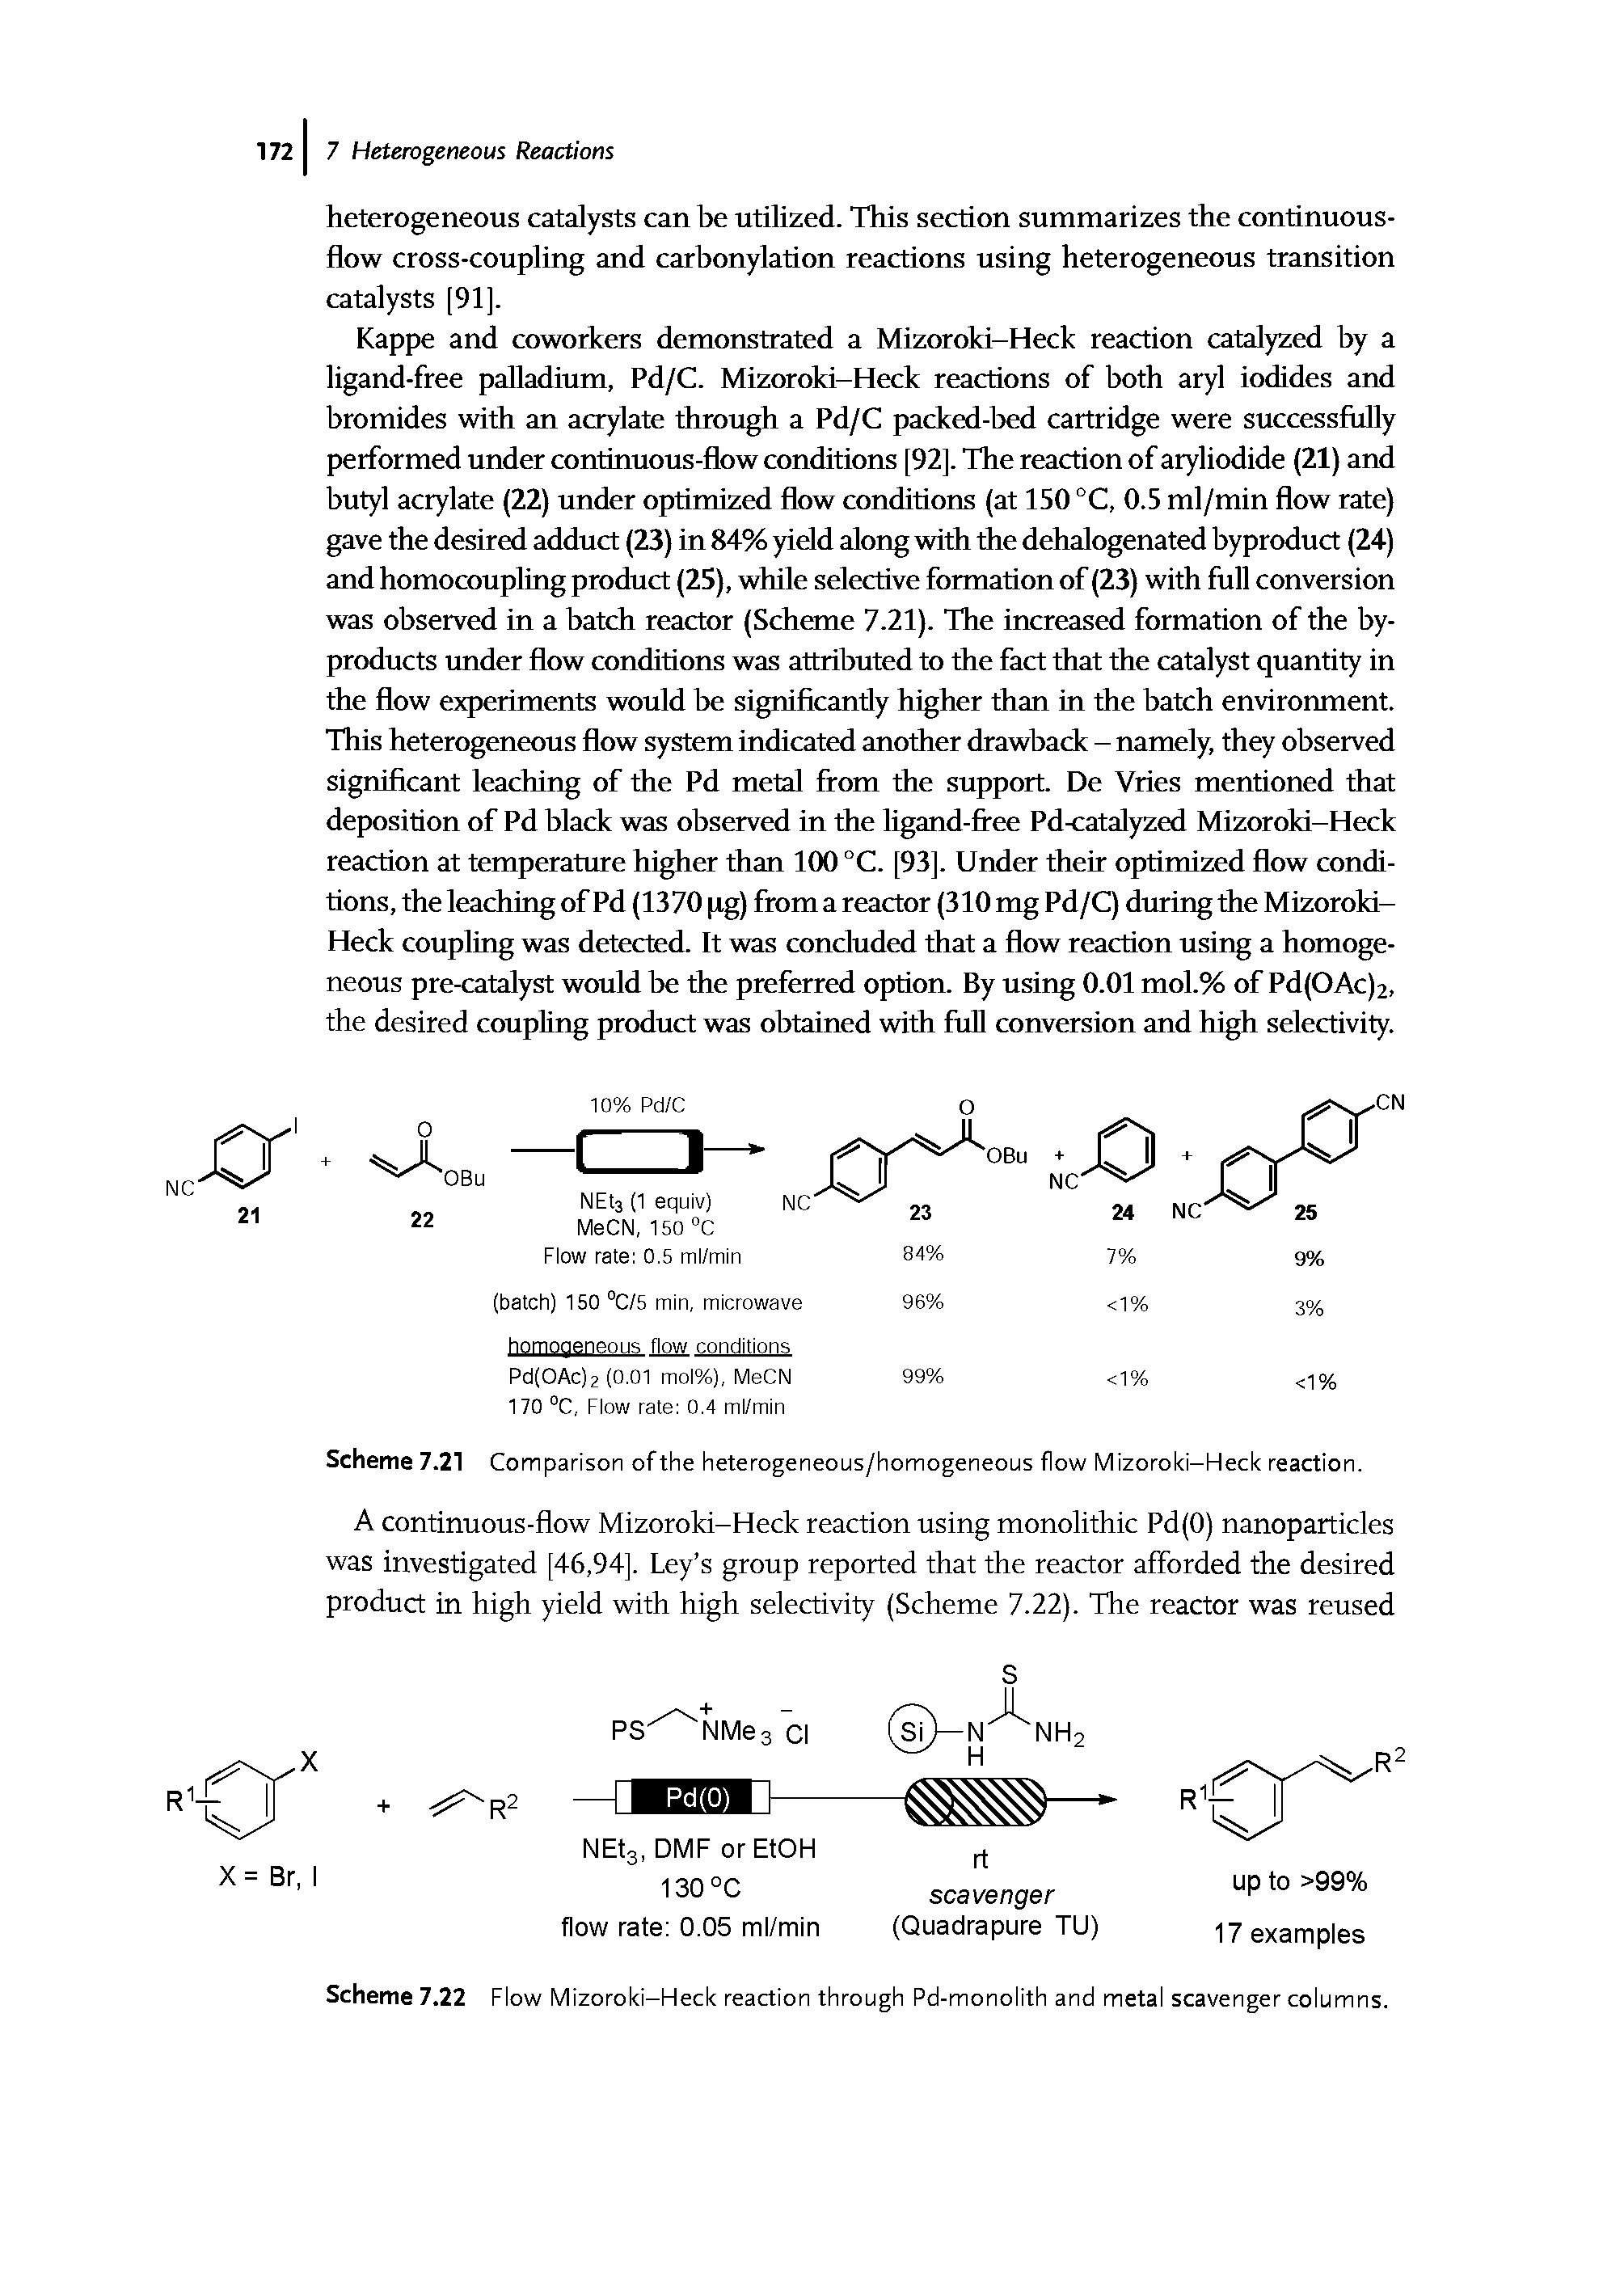 Scheme 7.21 Comparison of the heterogeneous/homogeneous flow Mizoroki-Heck reaction.